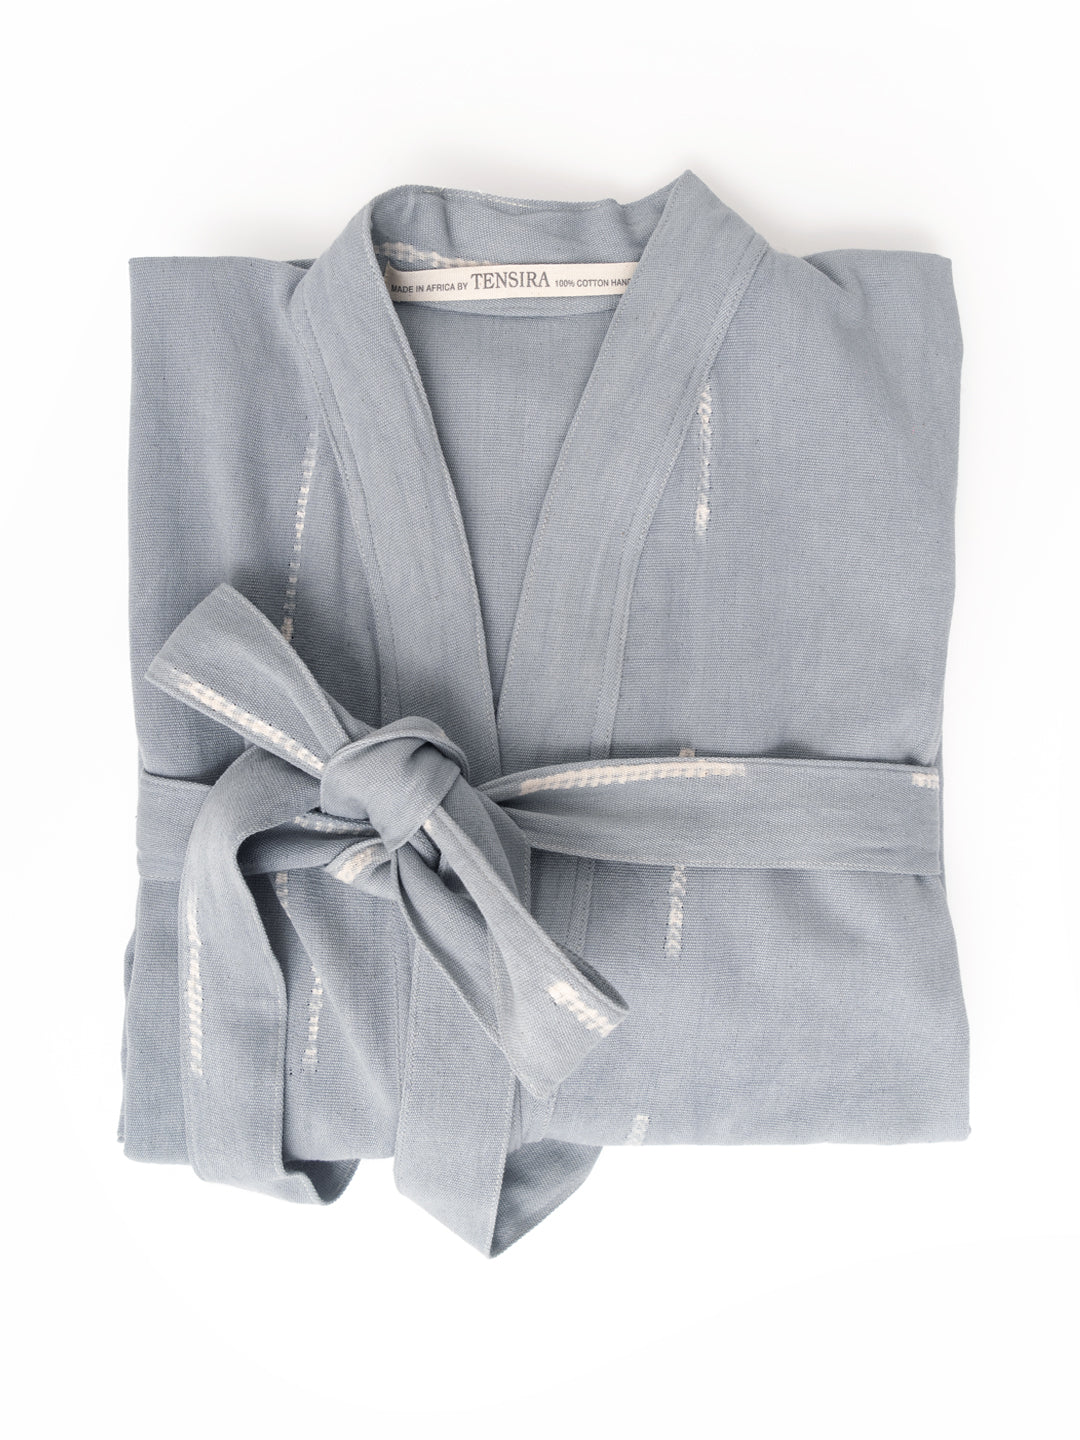 Kimono Tensira 100% coton, teint à la main